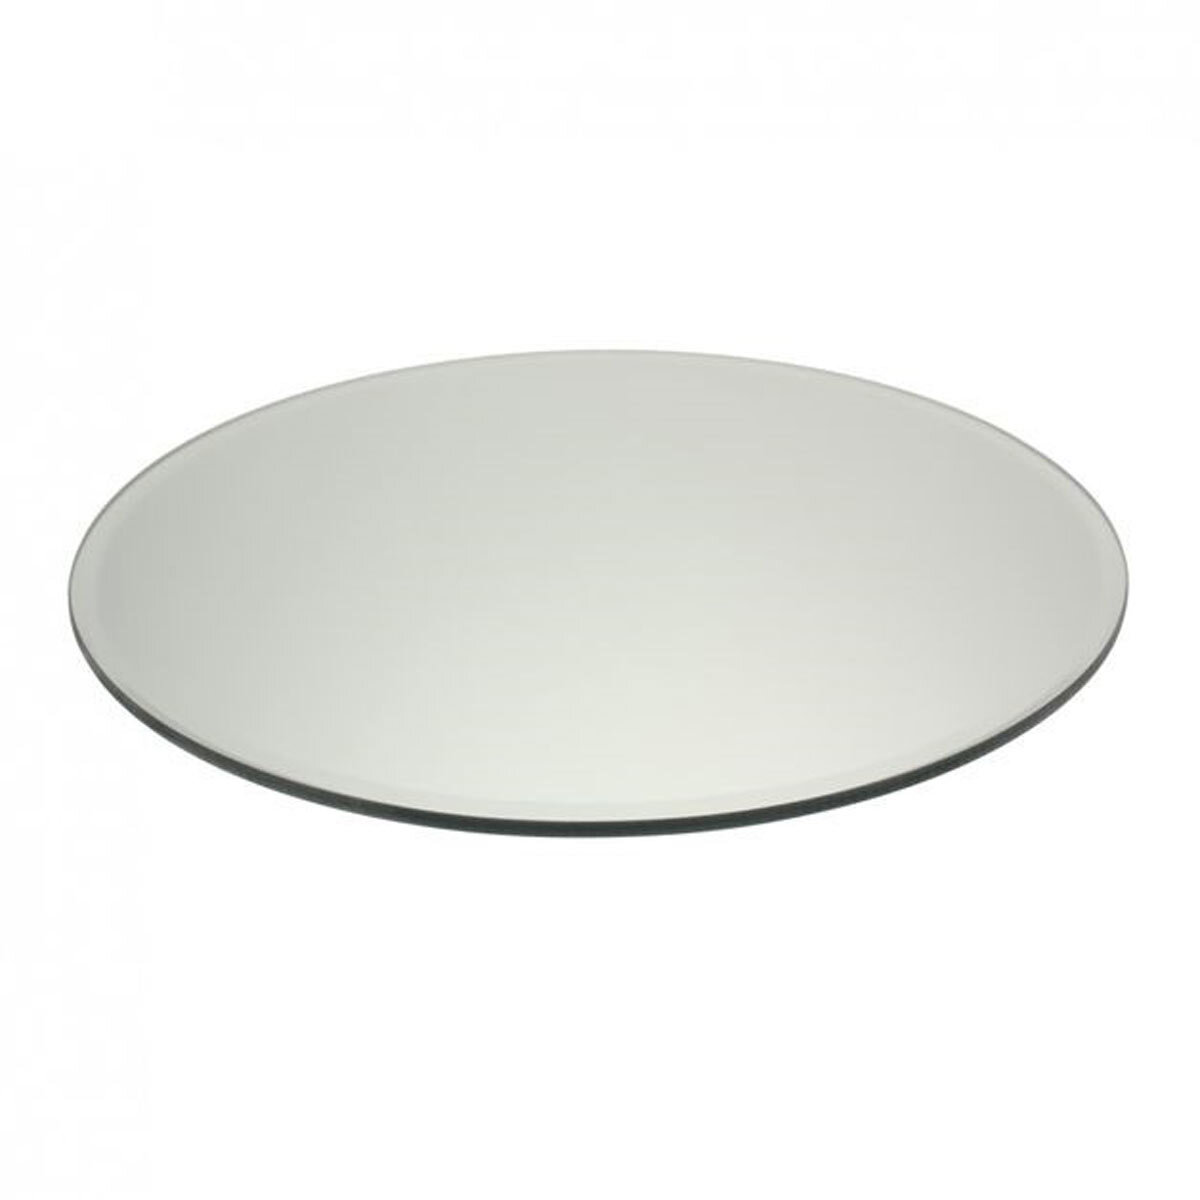 Mirror plate